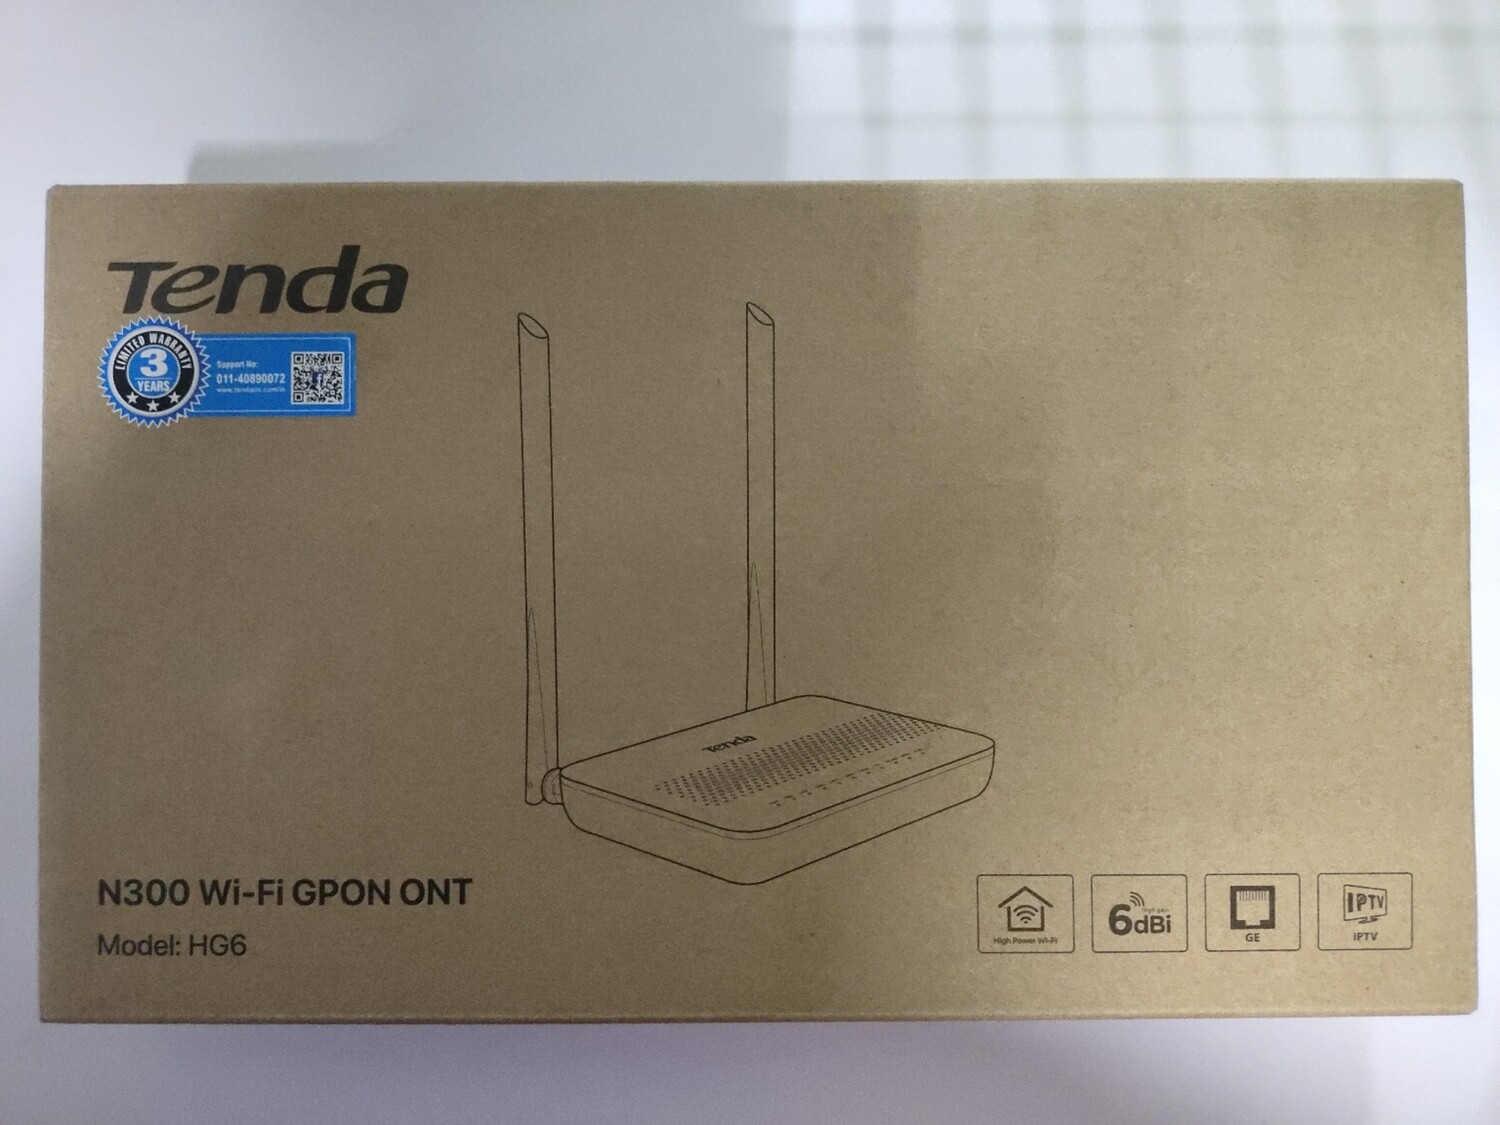 Tenda HG6 N300 Wi-Fi Gpon ONT Fiber Router